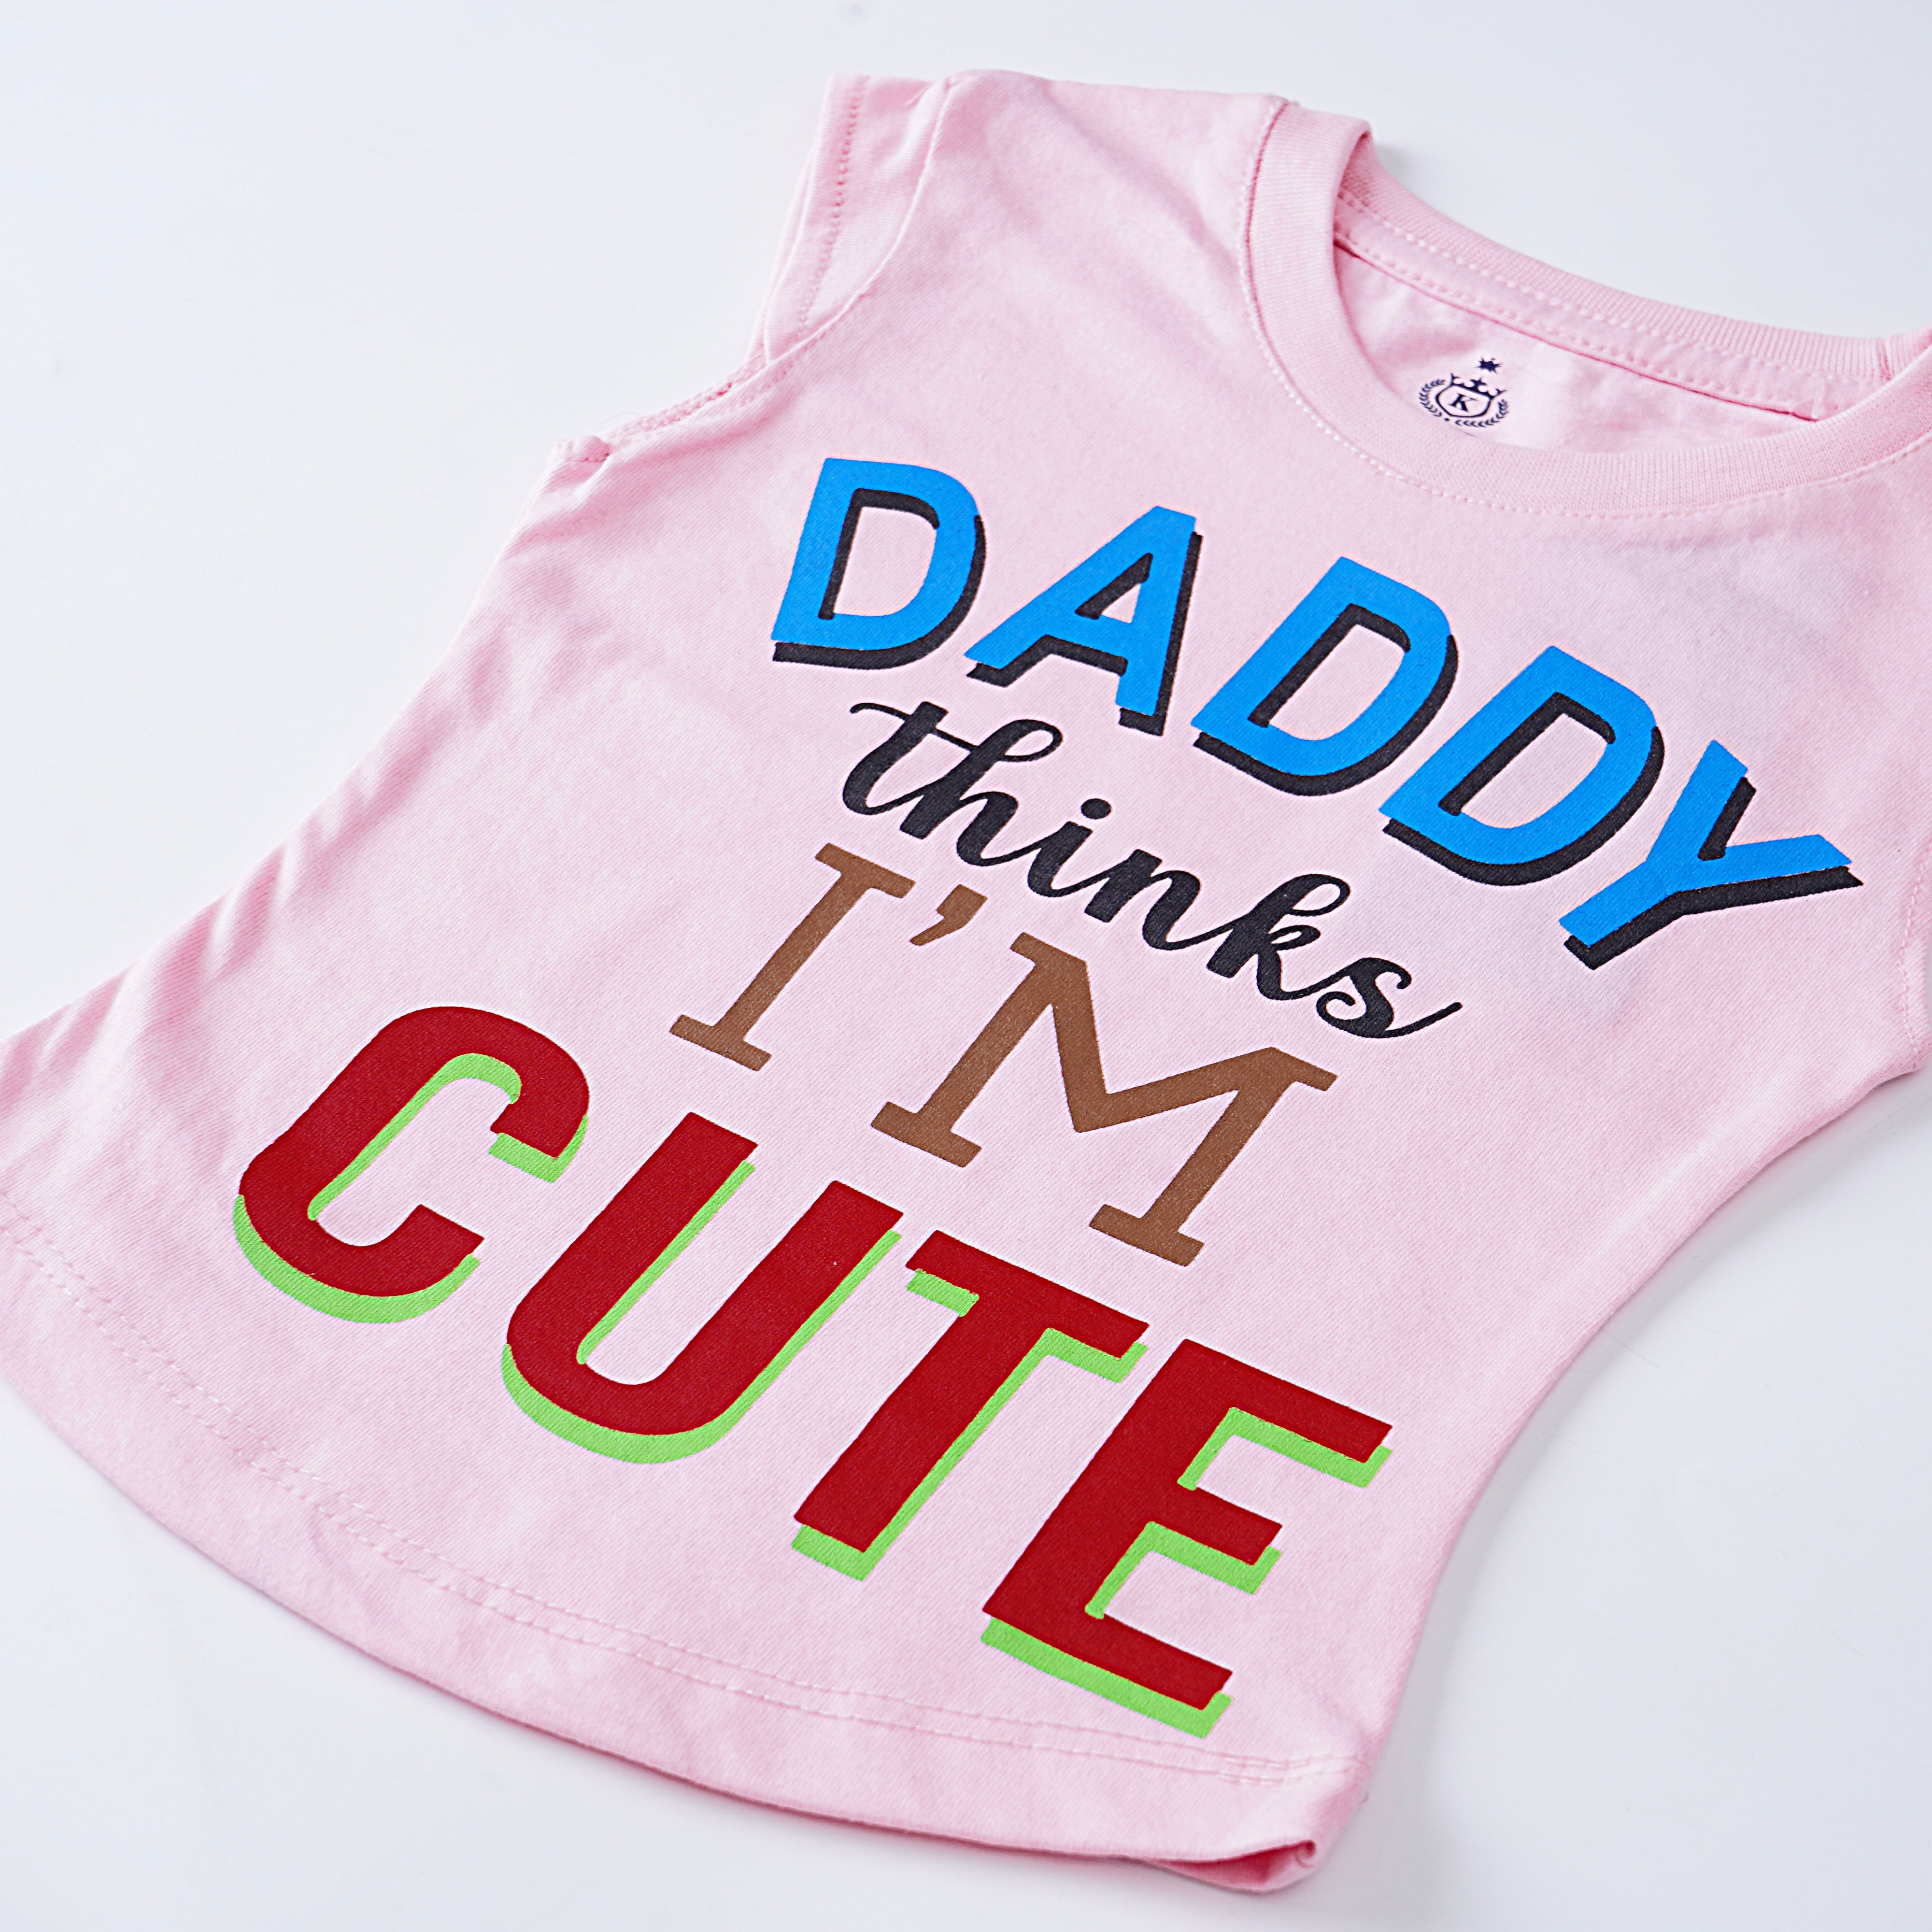 Girls T shirt (Daddy)